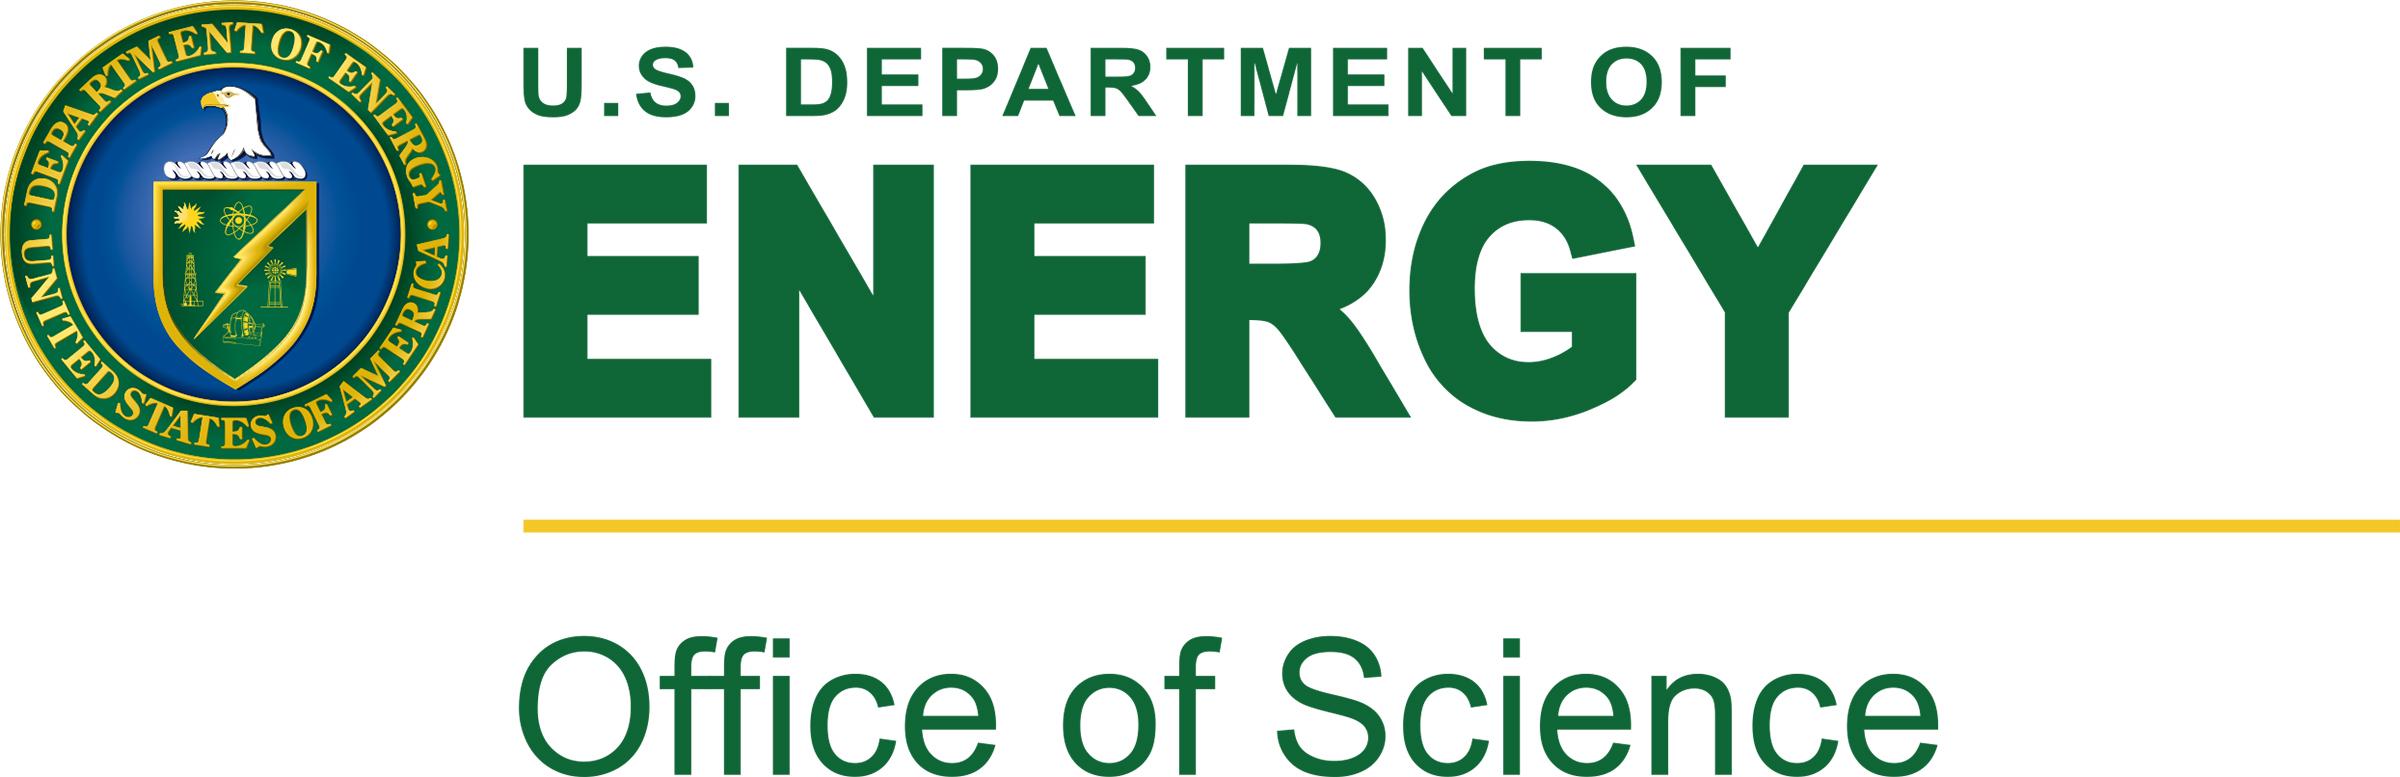 Department of Energy Logo - SC Logos. U.S. DOE Office of Science (SC)